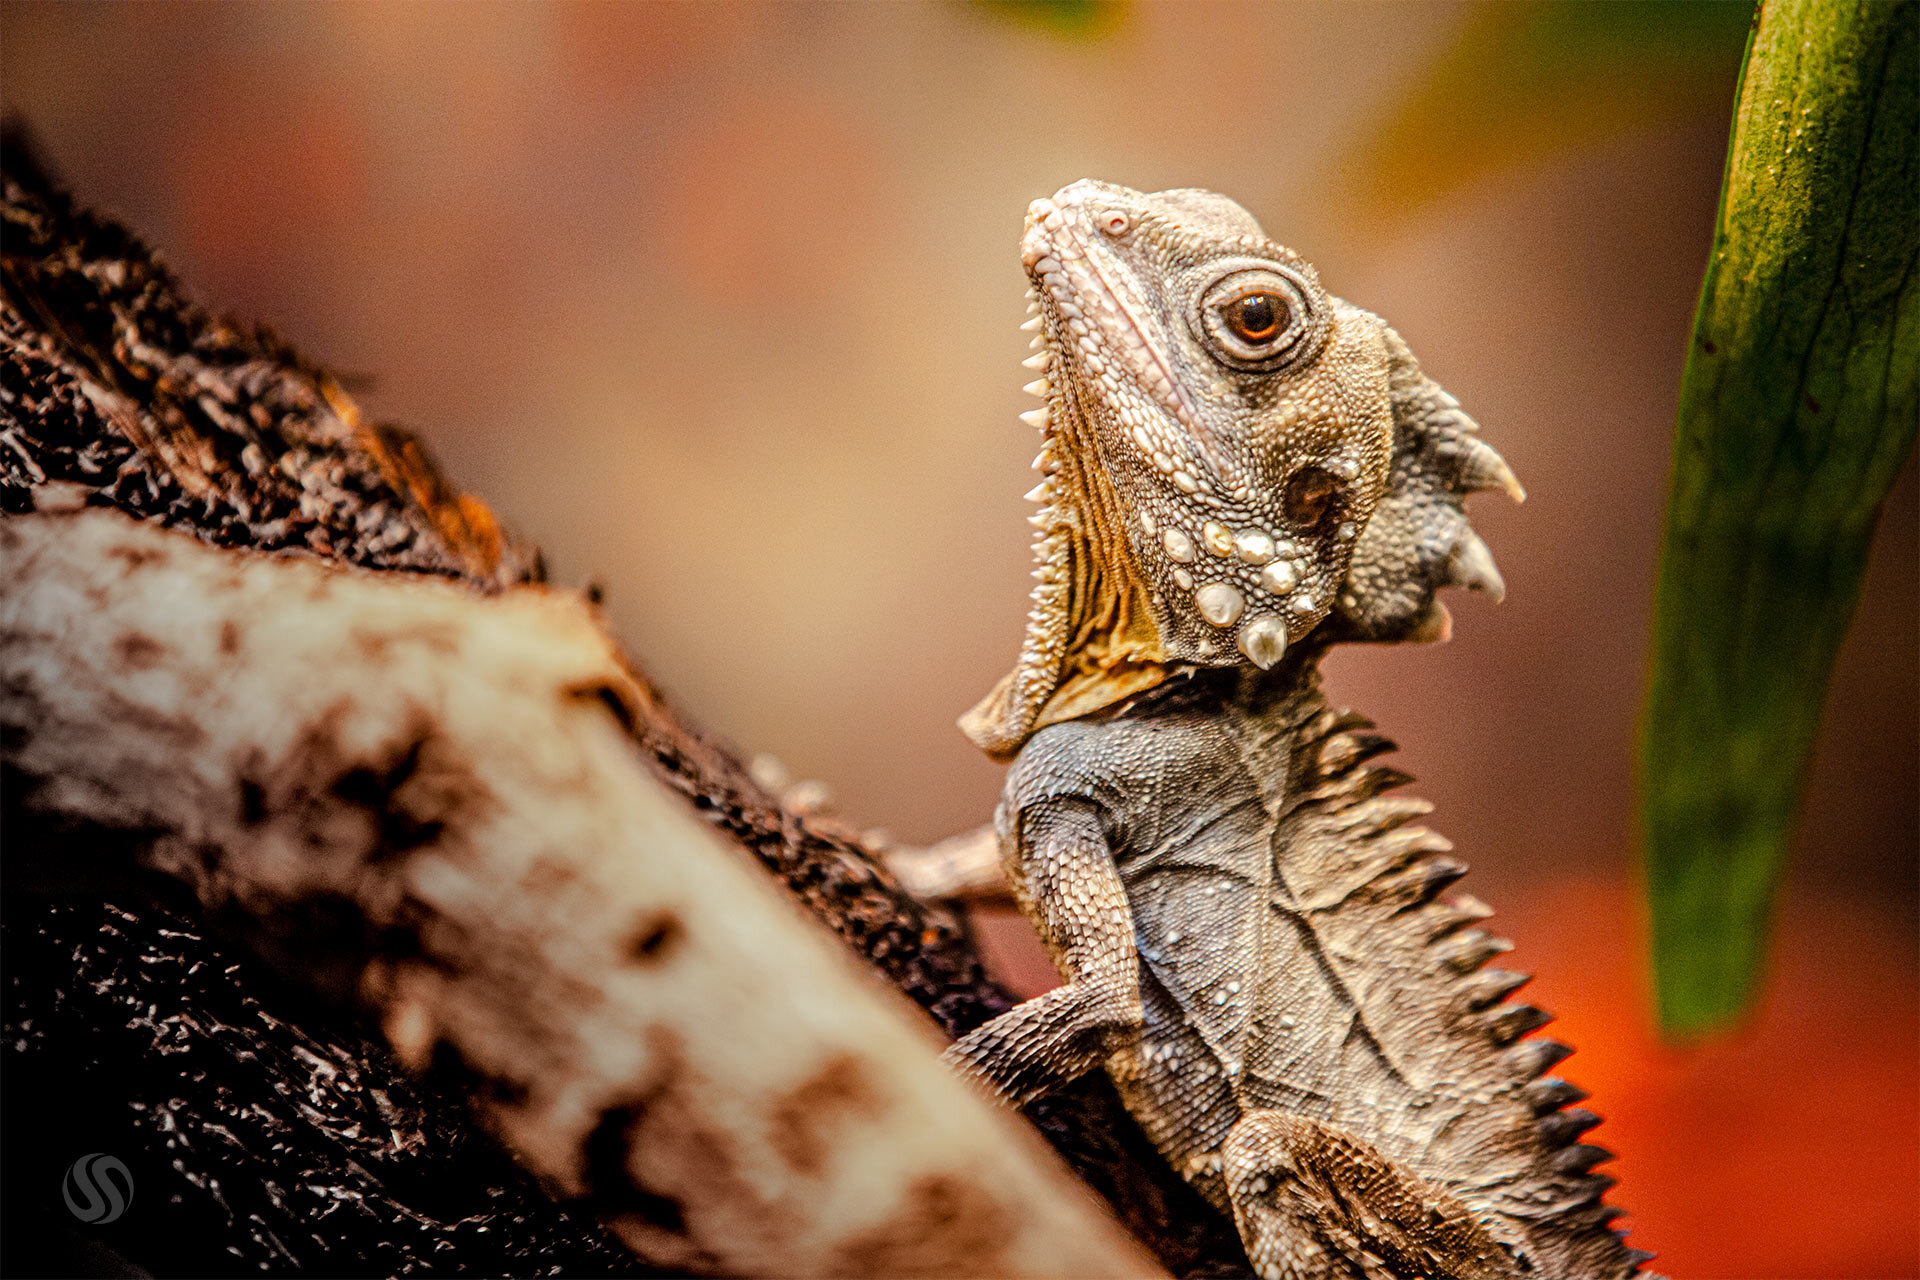 Lizard - Healesville Sanctuary, Victoria, Australia